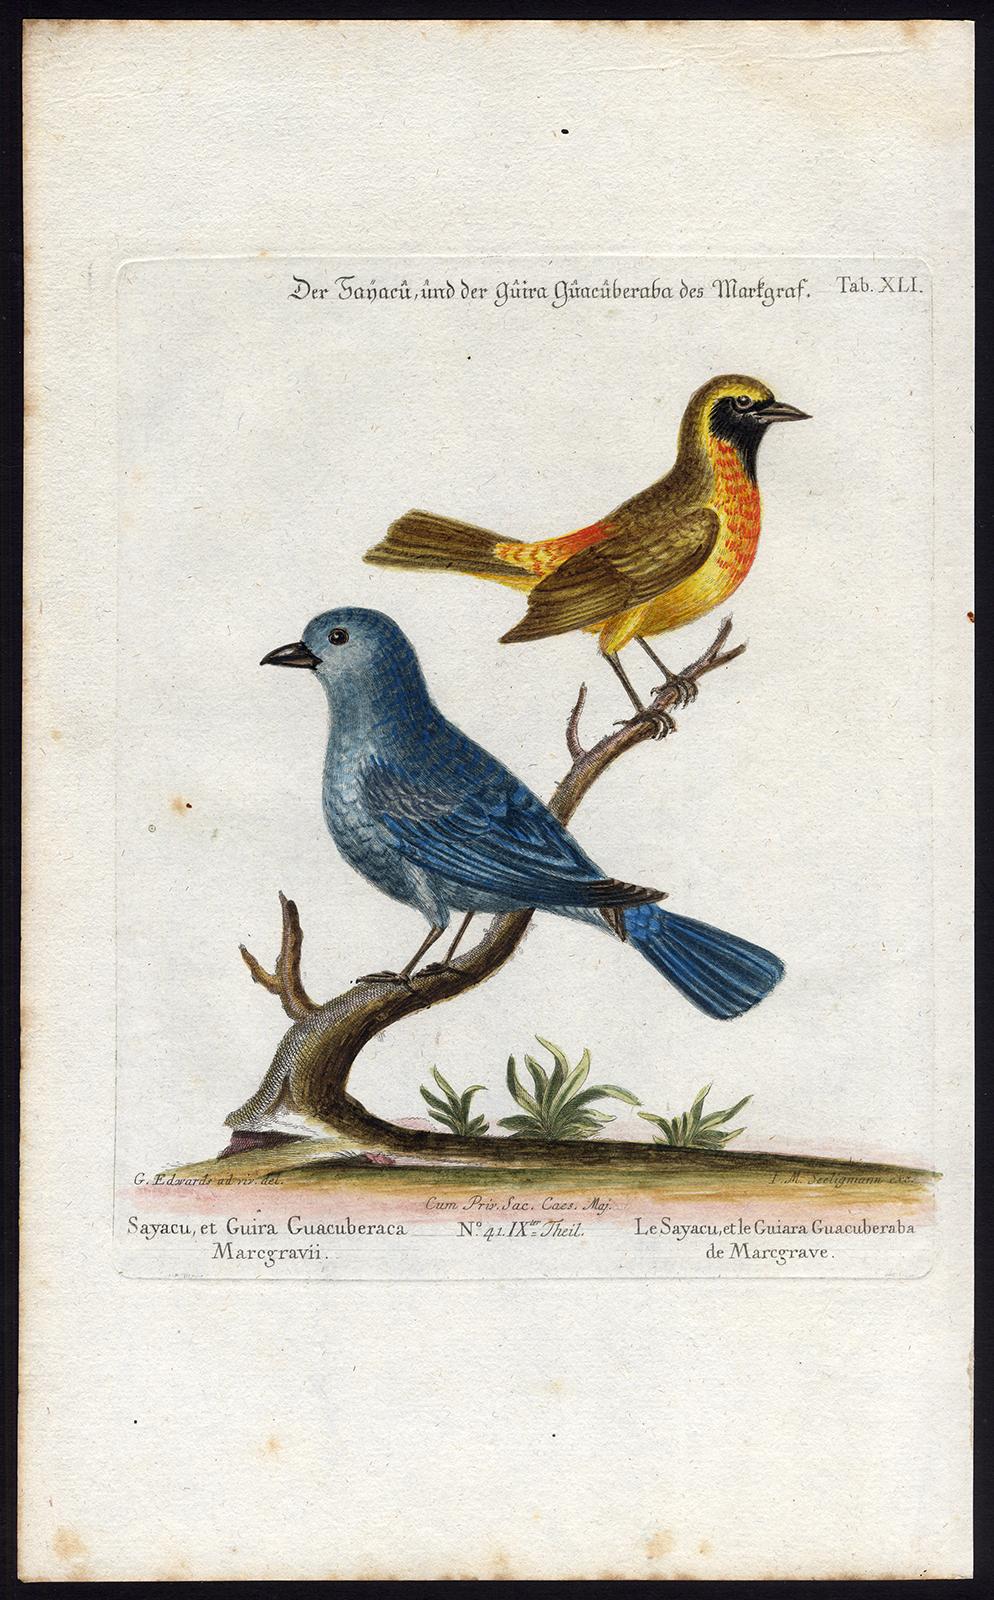 Johann Michael Seligmann Animal Print - The Sayacu and Guira Guacuberaba by Seligmann - Handcoloured - 18th century